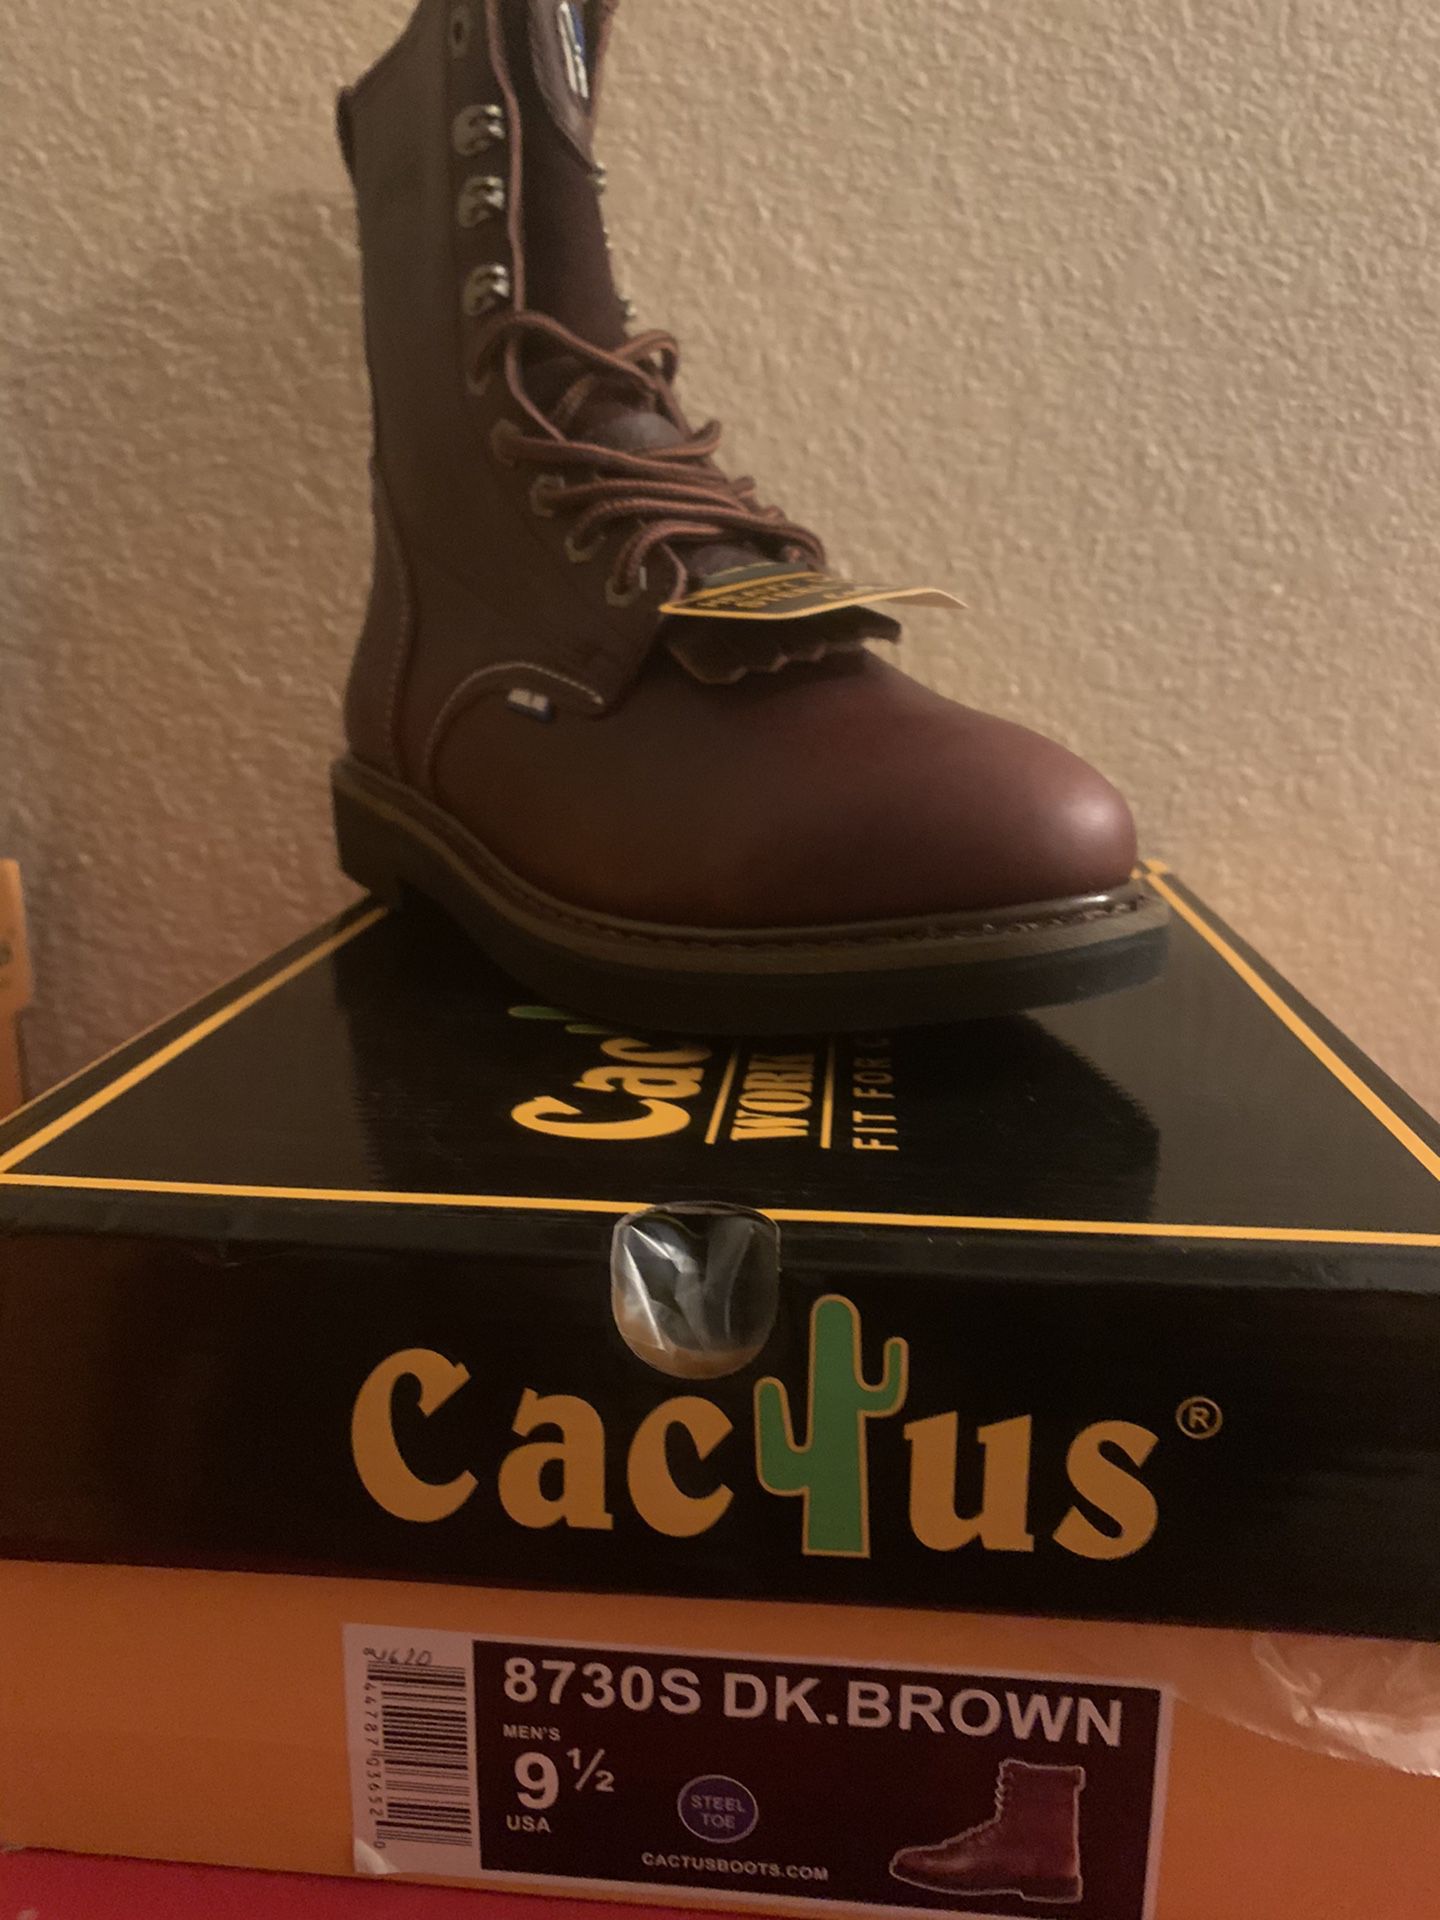 Cactus work boots